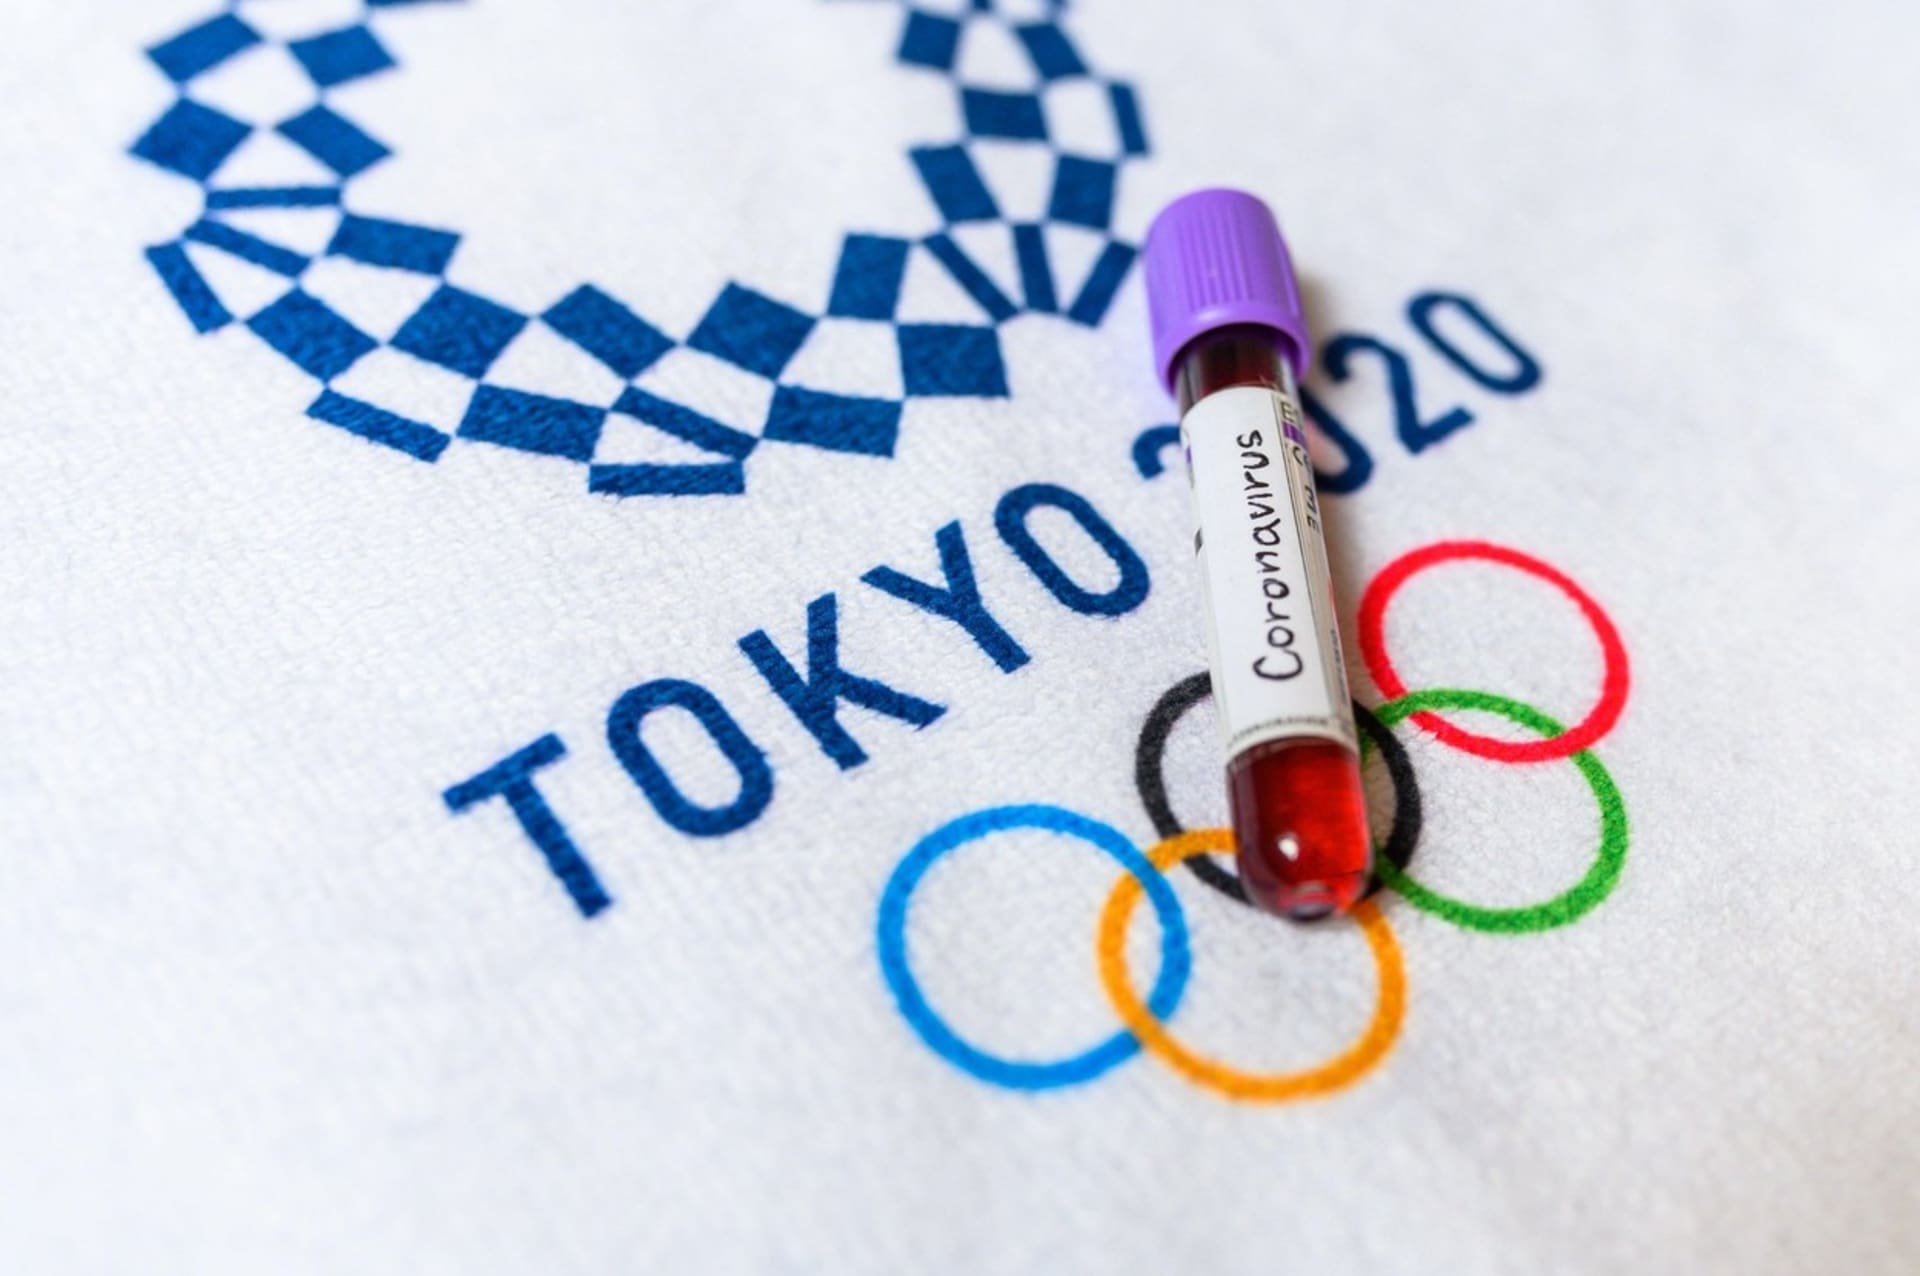 Šéf WHO Tedros Adhanom Ghebreyesus podpořil konání olympijských her v Tokiu navzdory pokračující pandemii koronaviru.